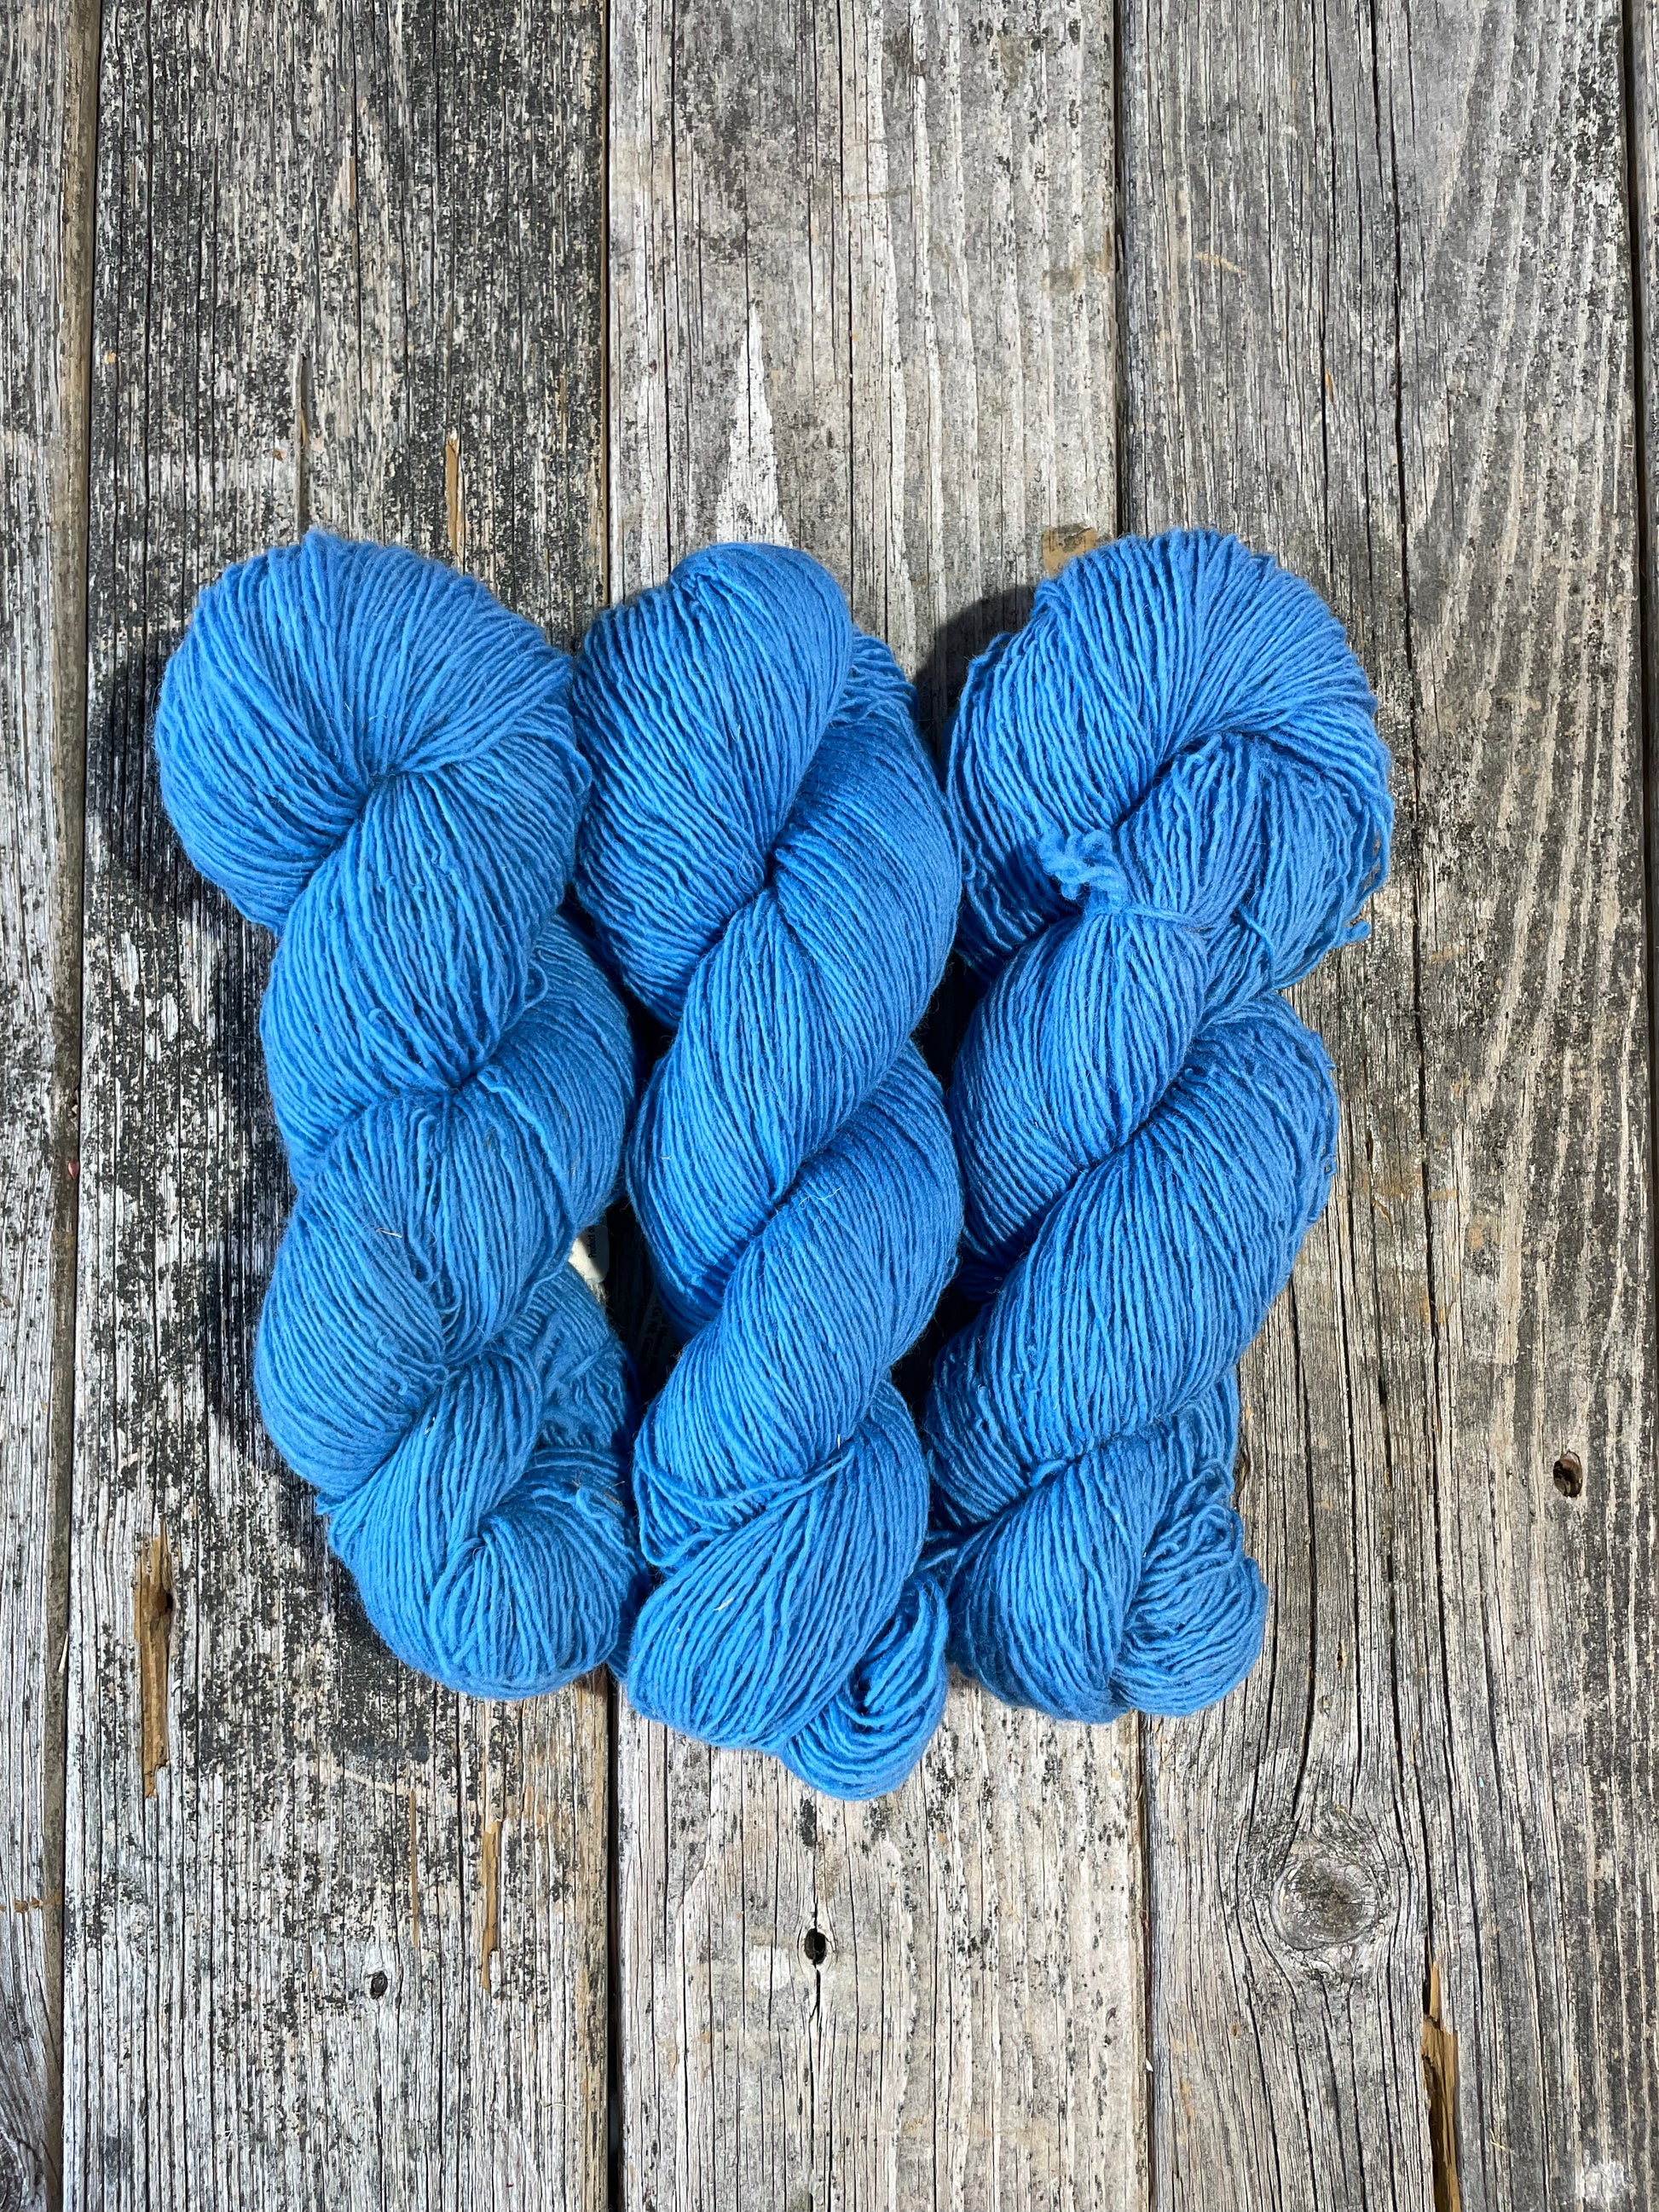 Briggs & Little Sport: Light Blue - Maine Yarn & Fiber Supply